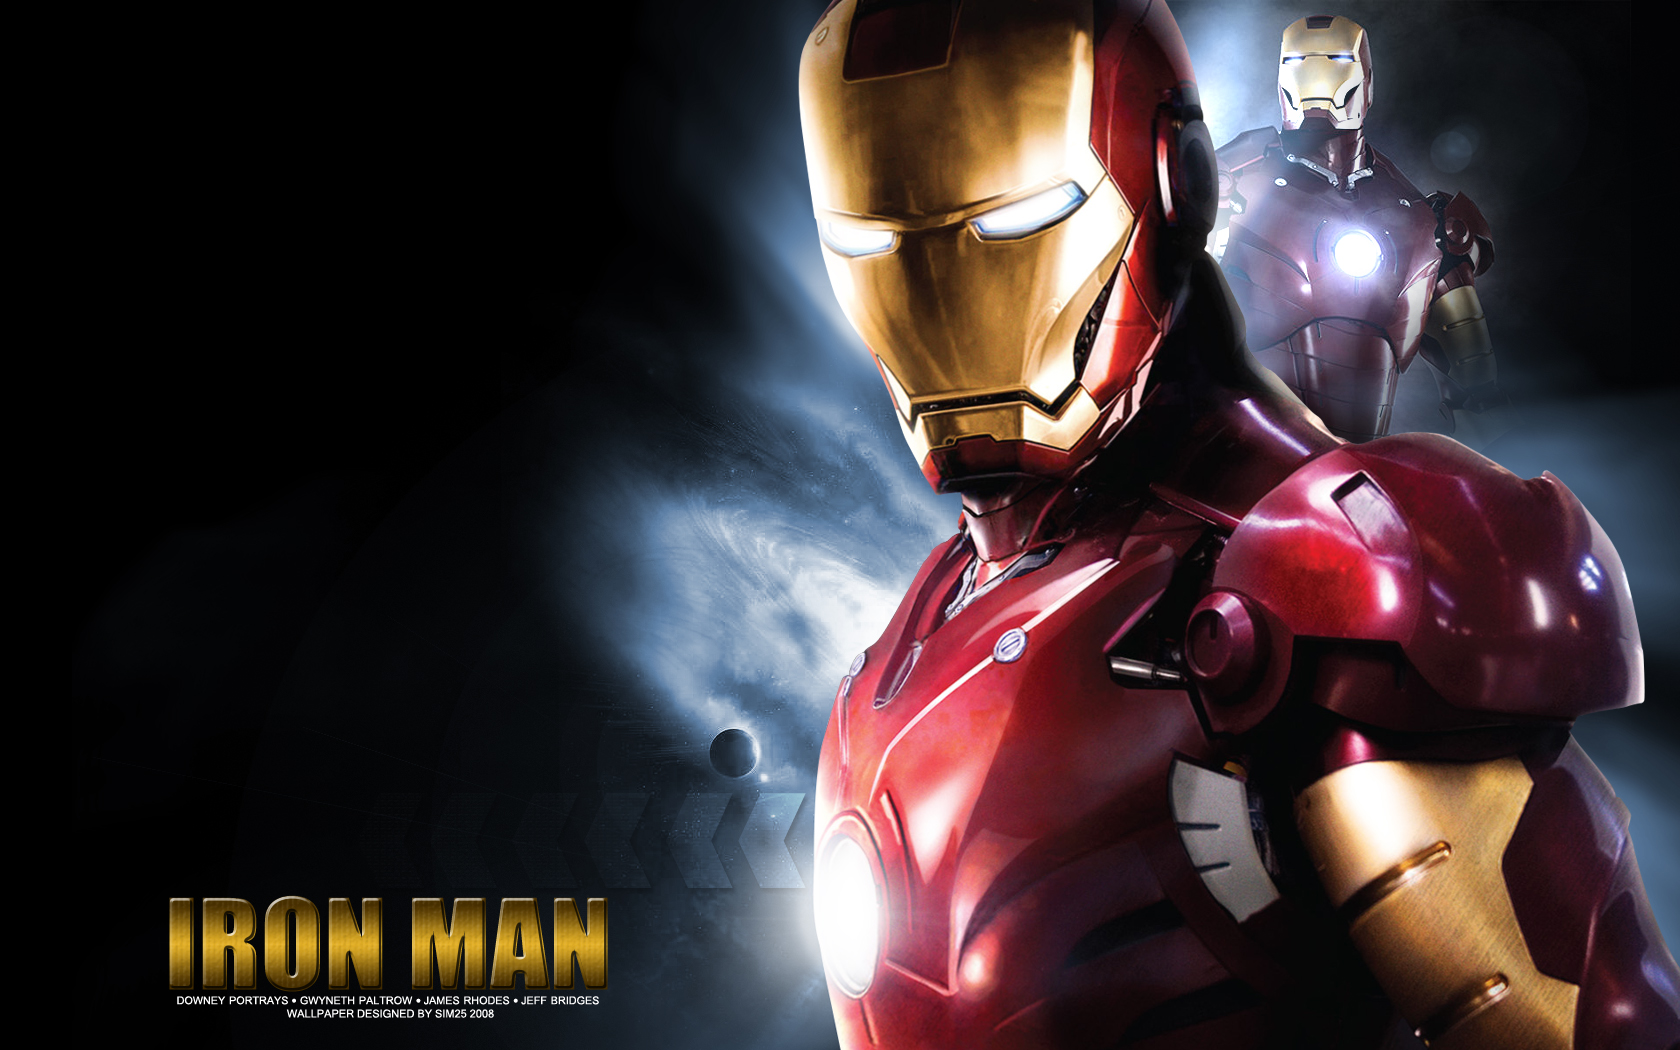 Iron Man wallpaper HD by Sim25-Design on DeviantArt